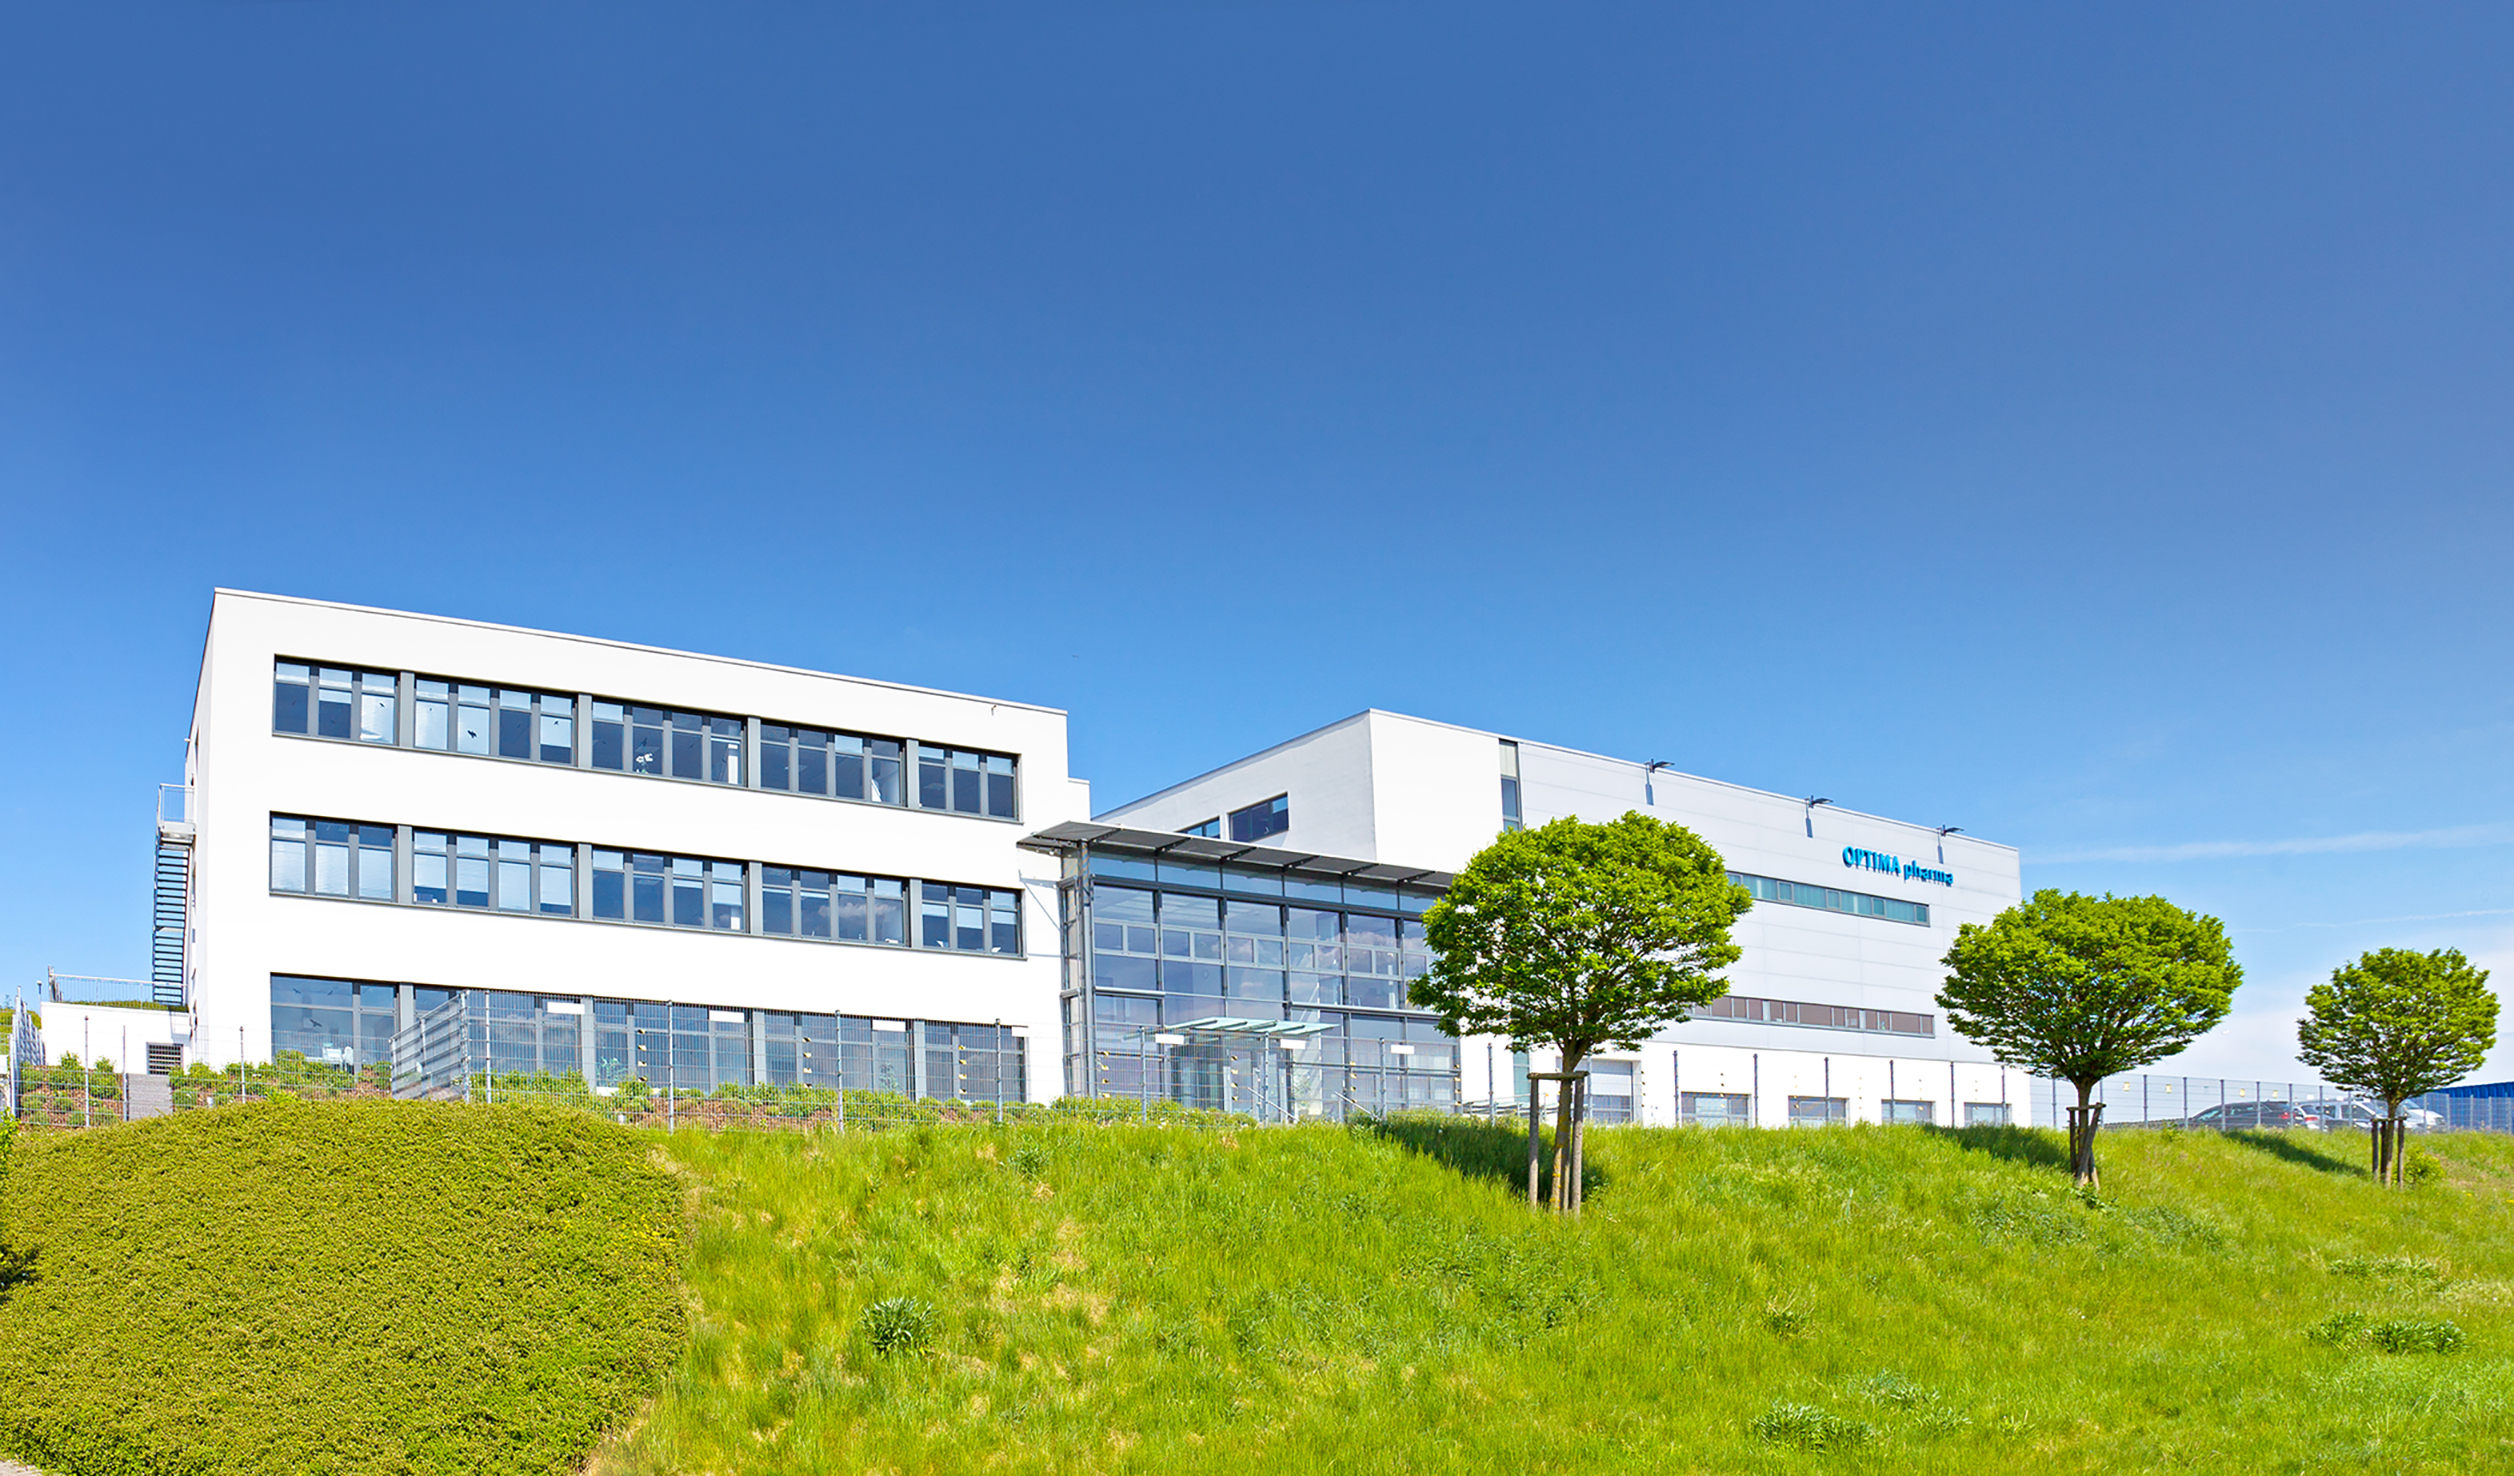 Company building OPTIMA pharma GmbH in Gladenbach-Mornshausen, Germany